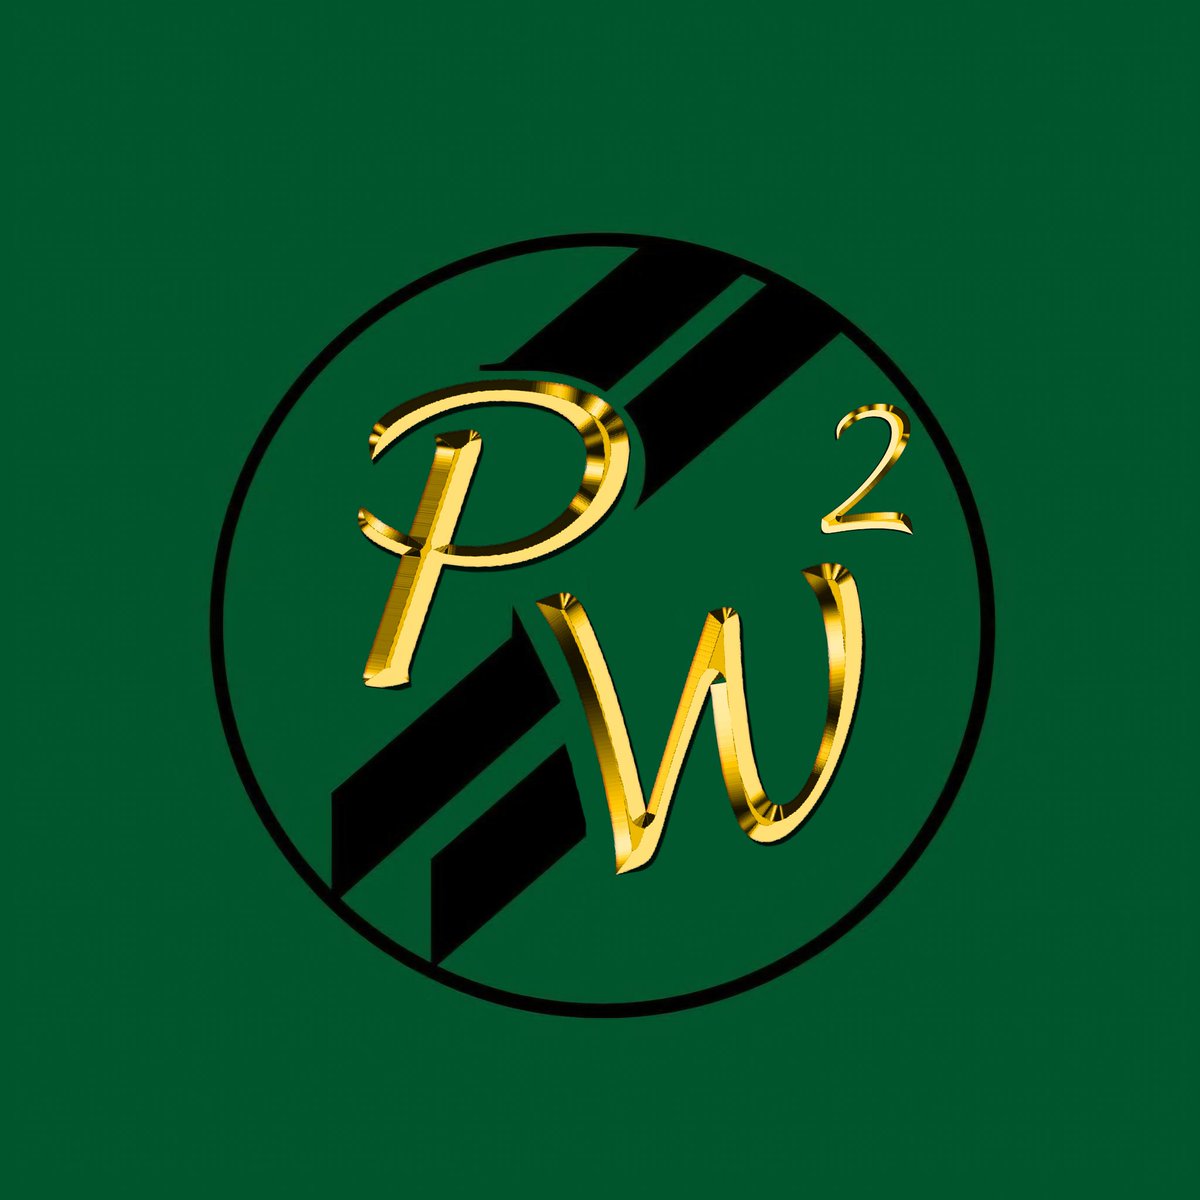 PondWater 2

Stream will resume shortly $PNDC 

🩸🌋